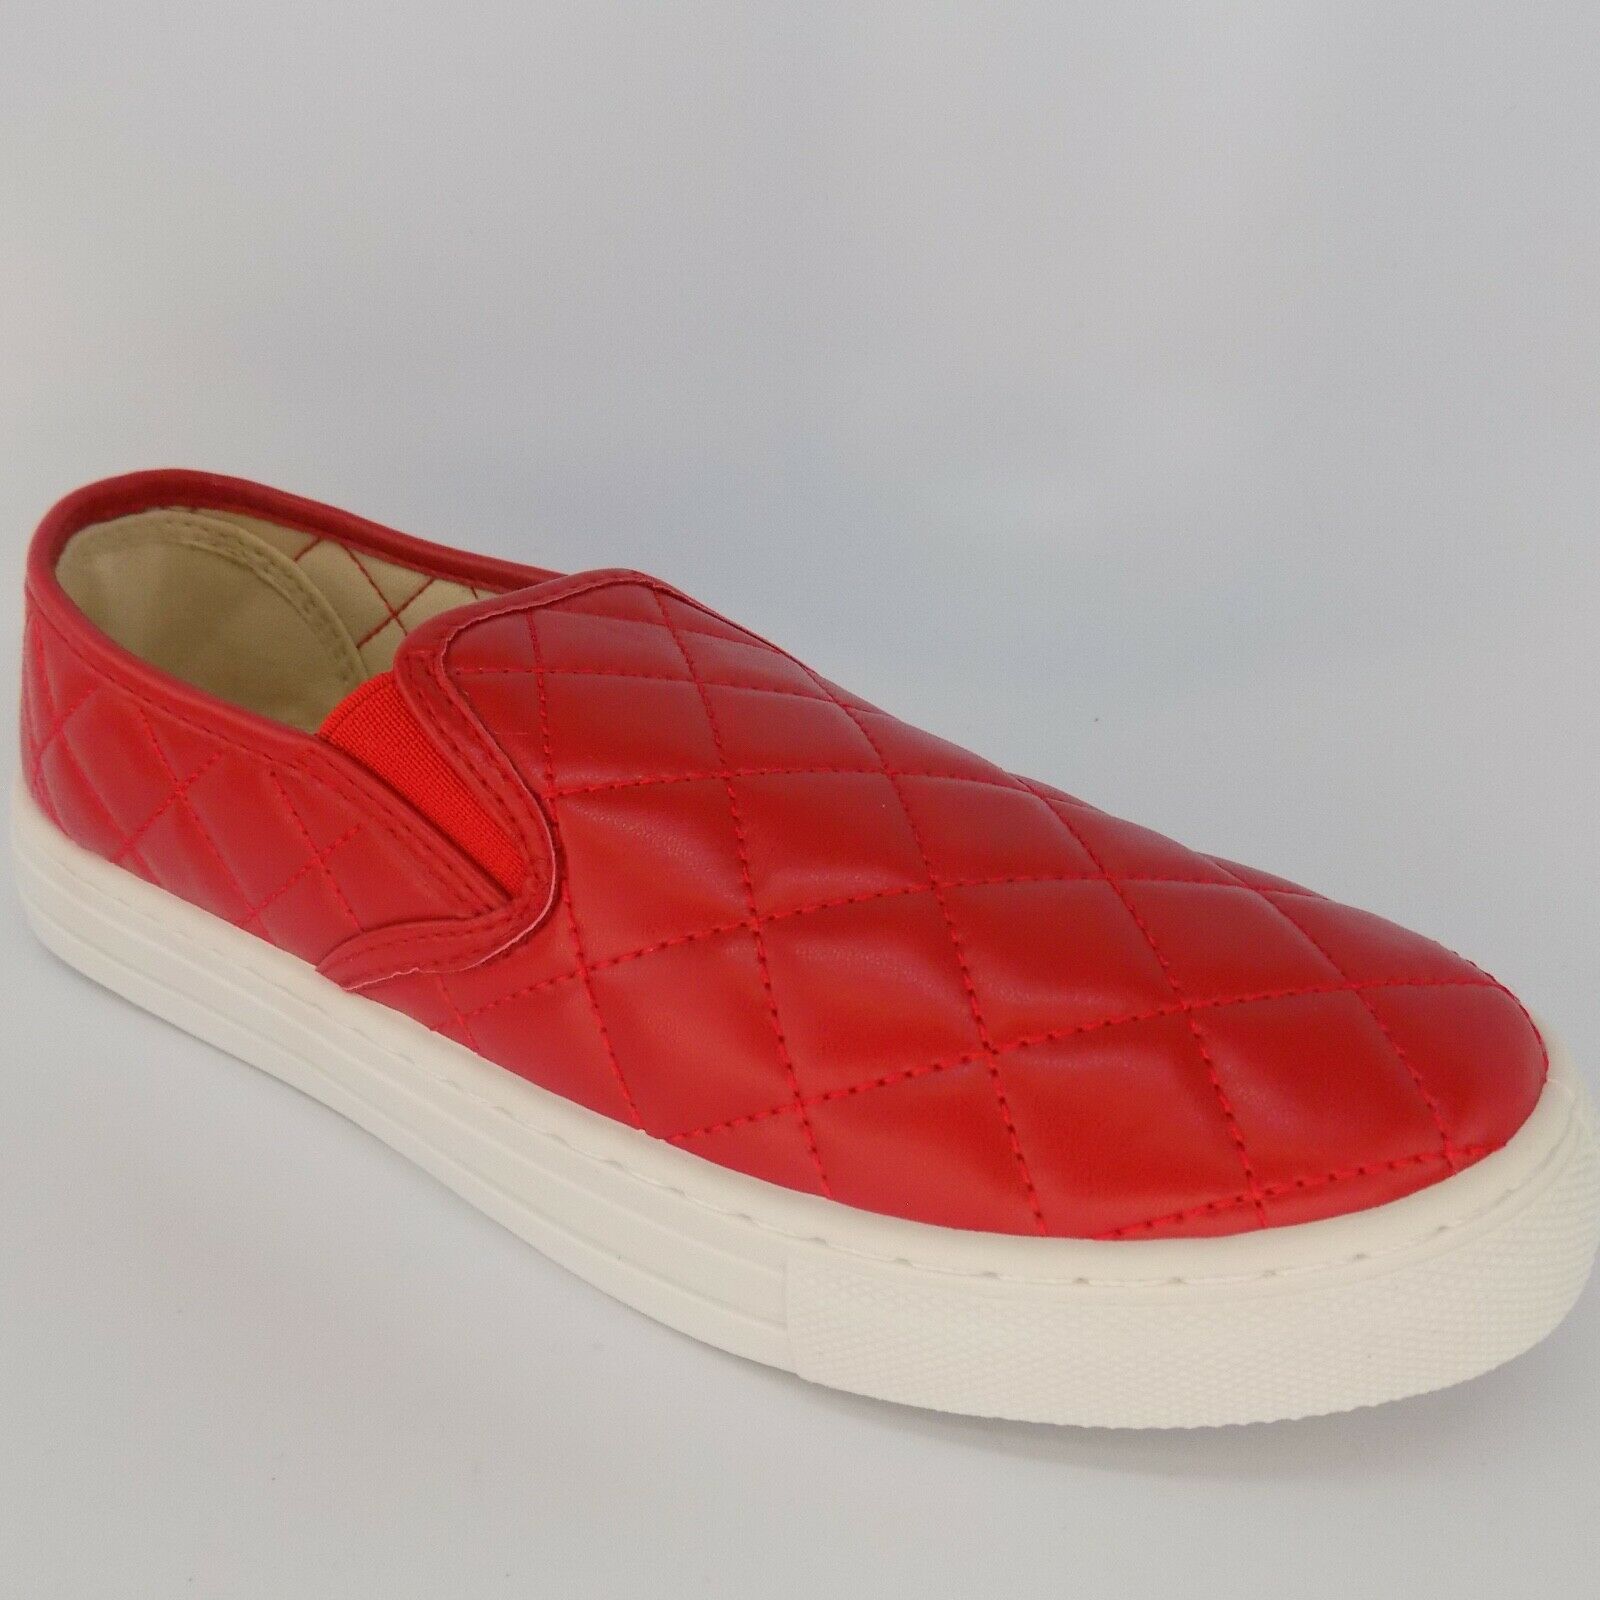 Qupid Reba 17c Fashion Sneakers Red Women Shoes Size 9 M AL5703